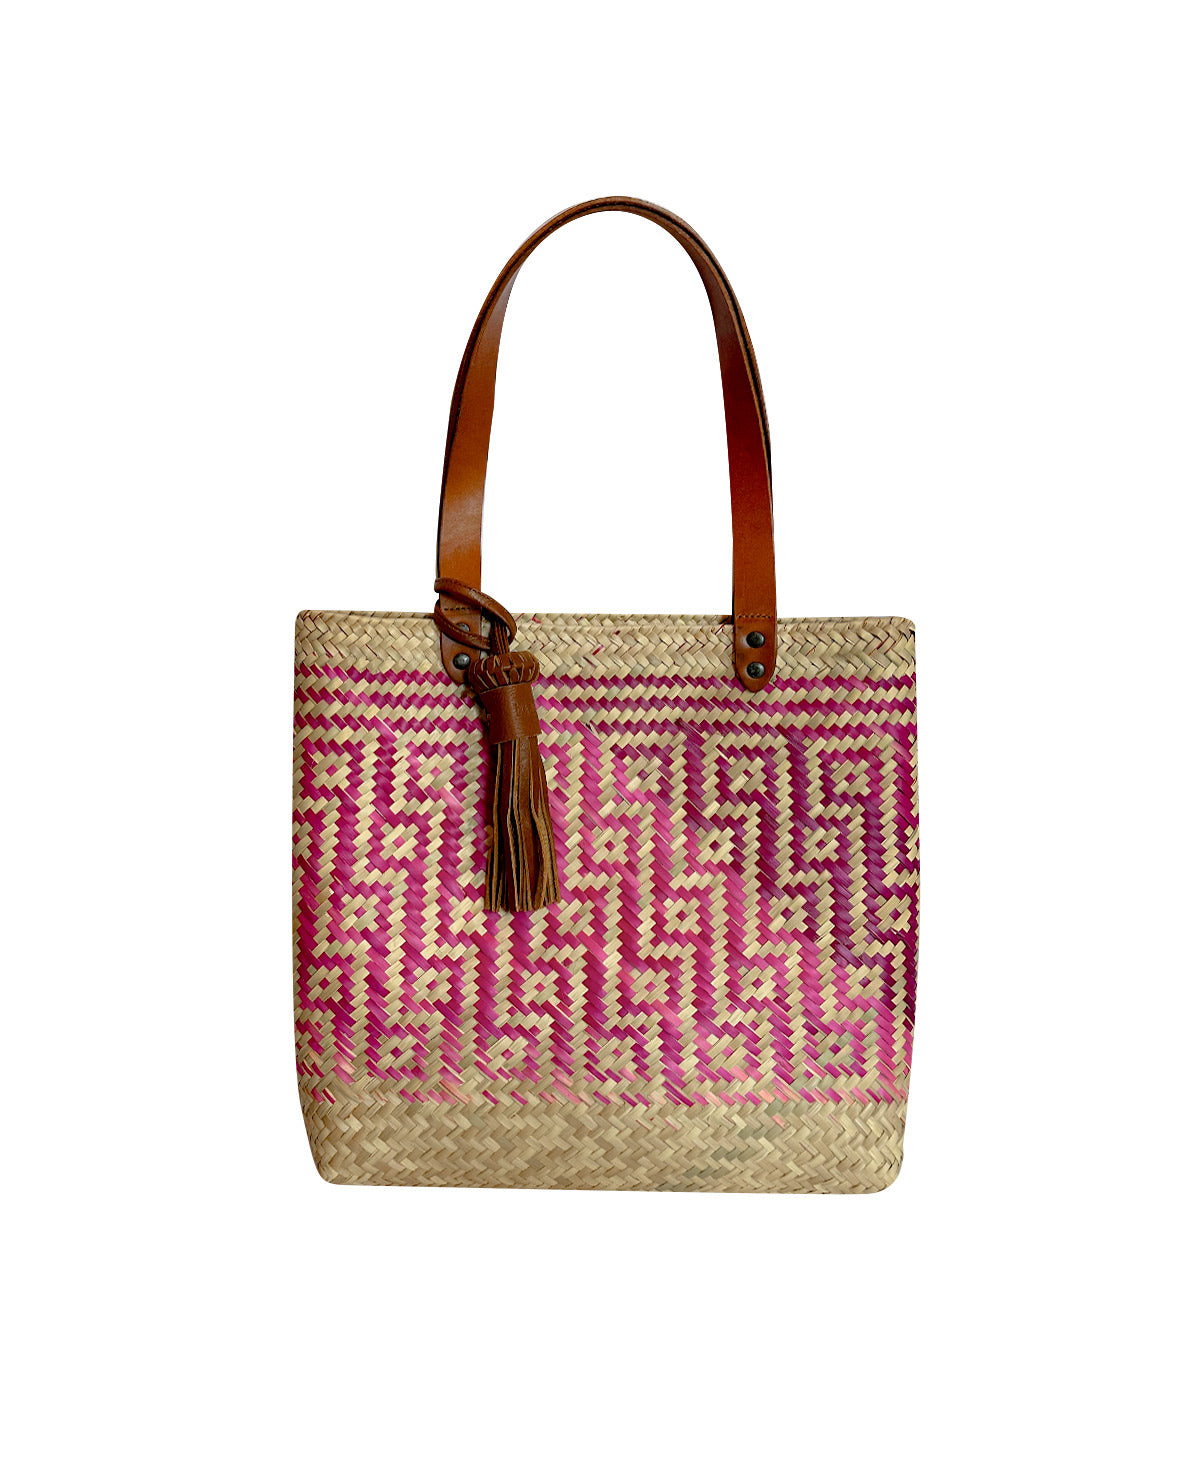 Keta tan leather tote bag / pink grid hand woven palm